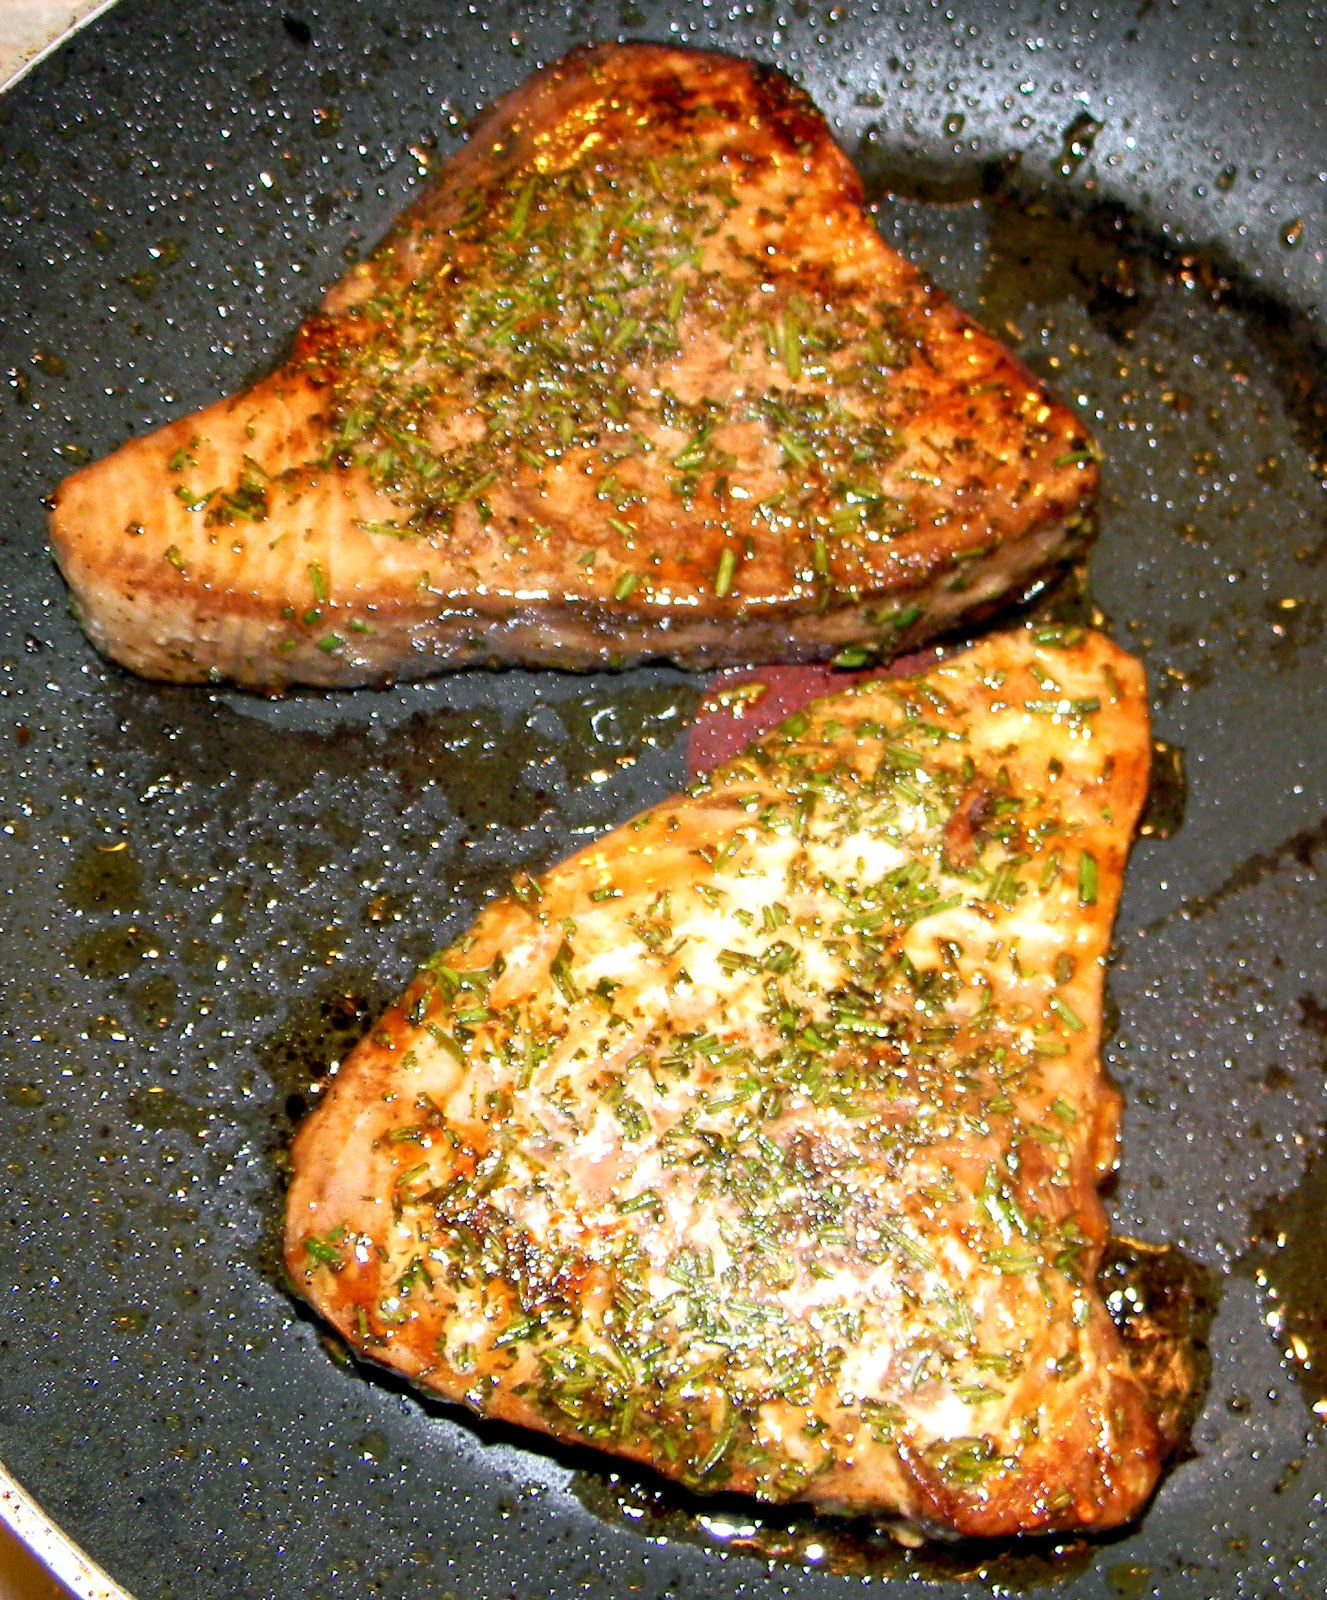 4 U Gluten Free: Grilled Rosemary Crusted Tuna Steak